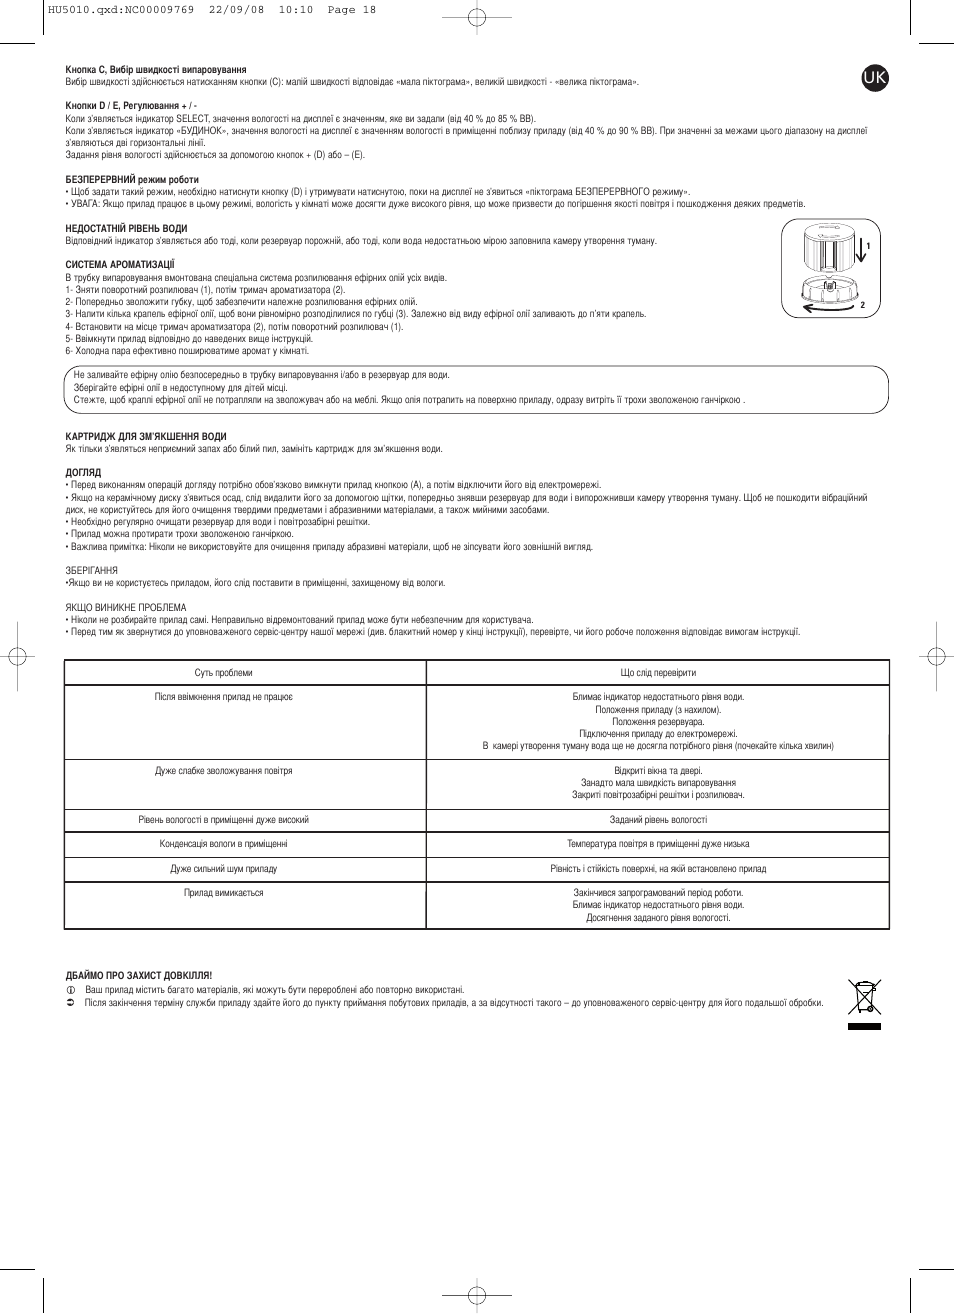 ROWENTA VITALITY HU5010 User Manual | Page 18 / 20